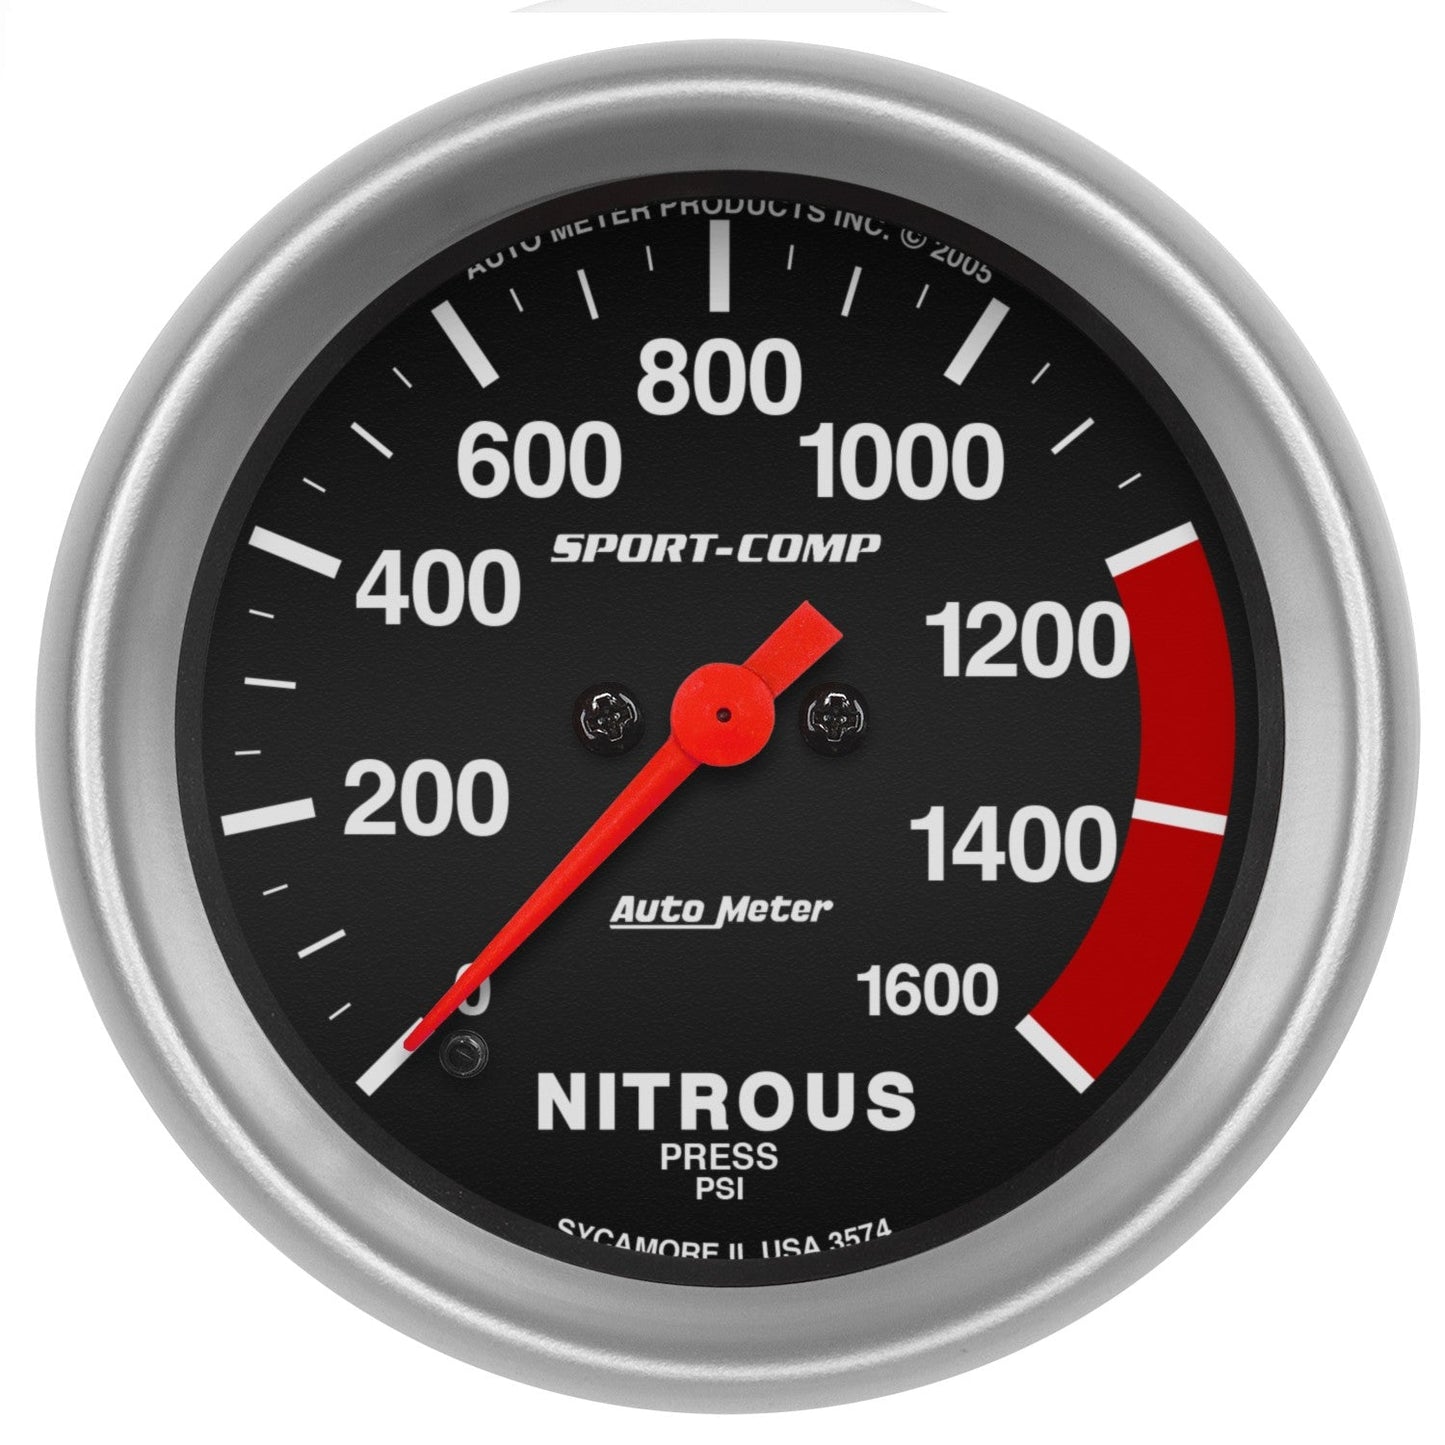 AutoMeter - PRESIÓN DE NITROSO DE 2-5/8", 0-1600 PSI, MOTOR PASO A PASO, SPORT-COMP ( 3574)